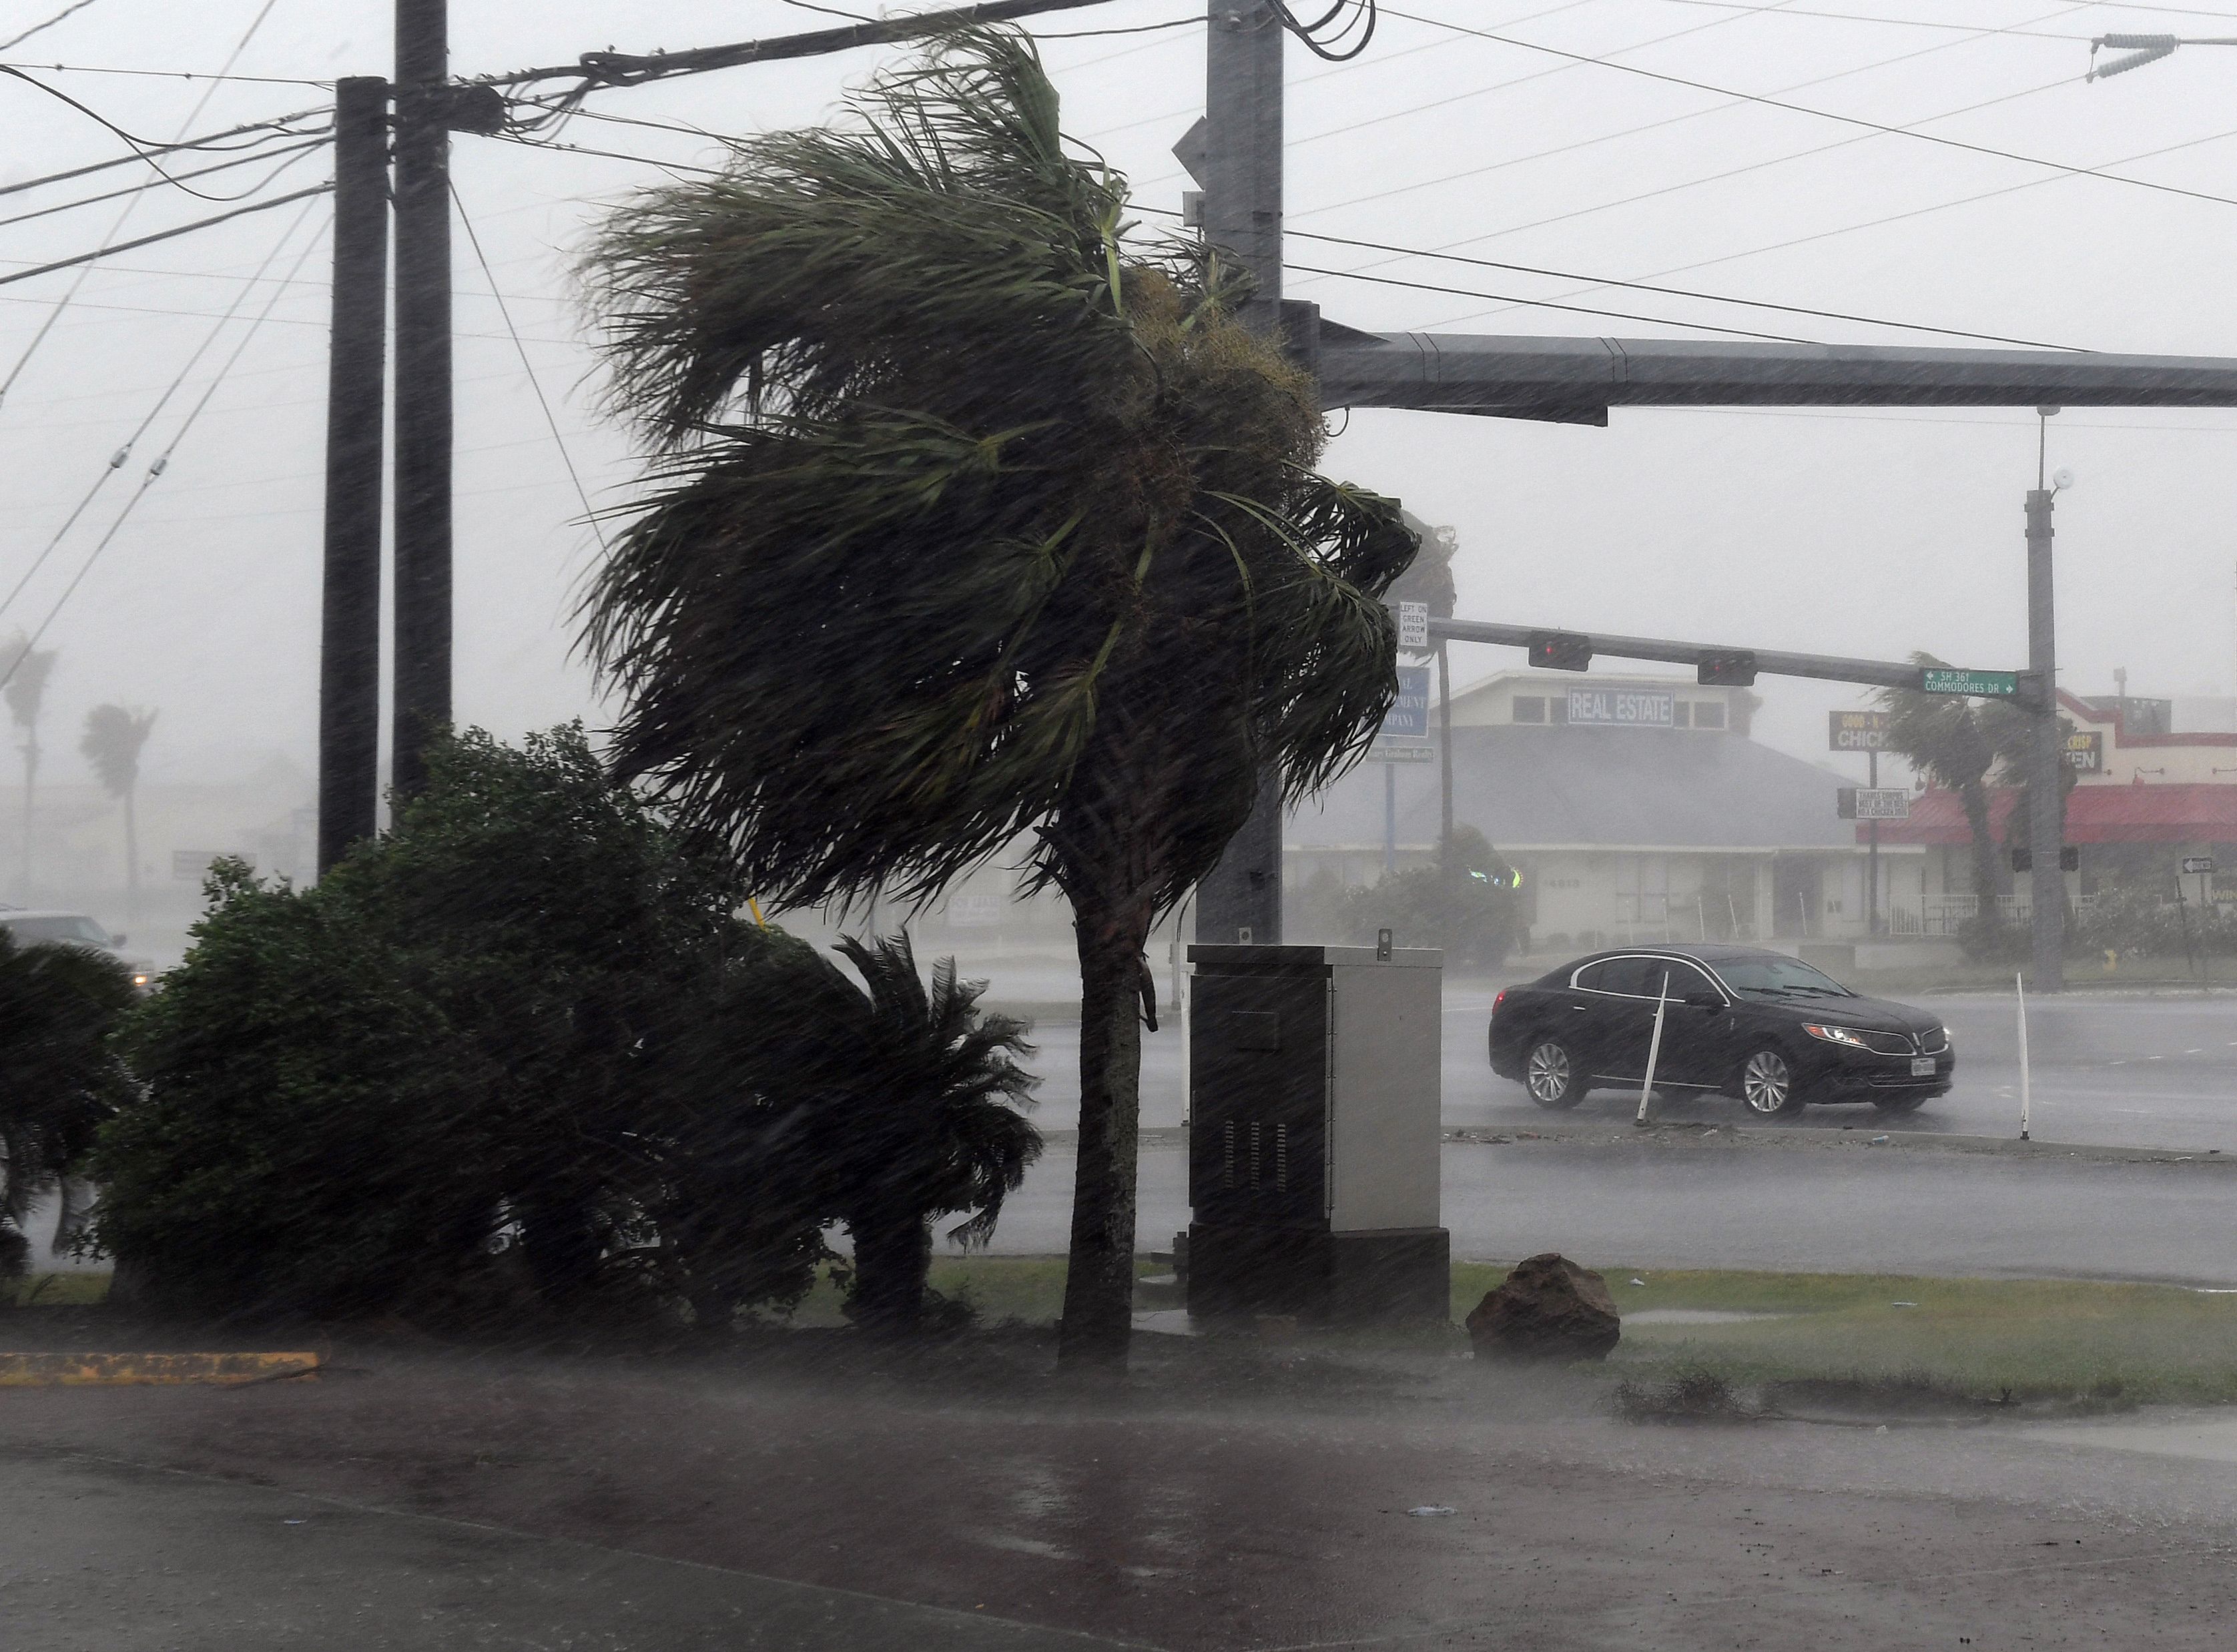 A motorist drives through heavy rain before the approaching Hurricane Harvey hits Corpus Christi, Texas on August 25, 2017.